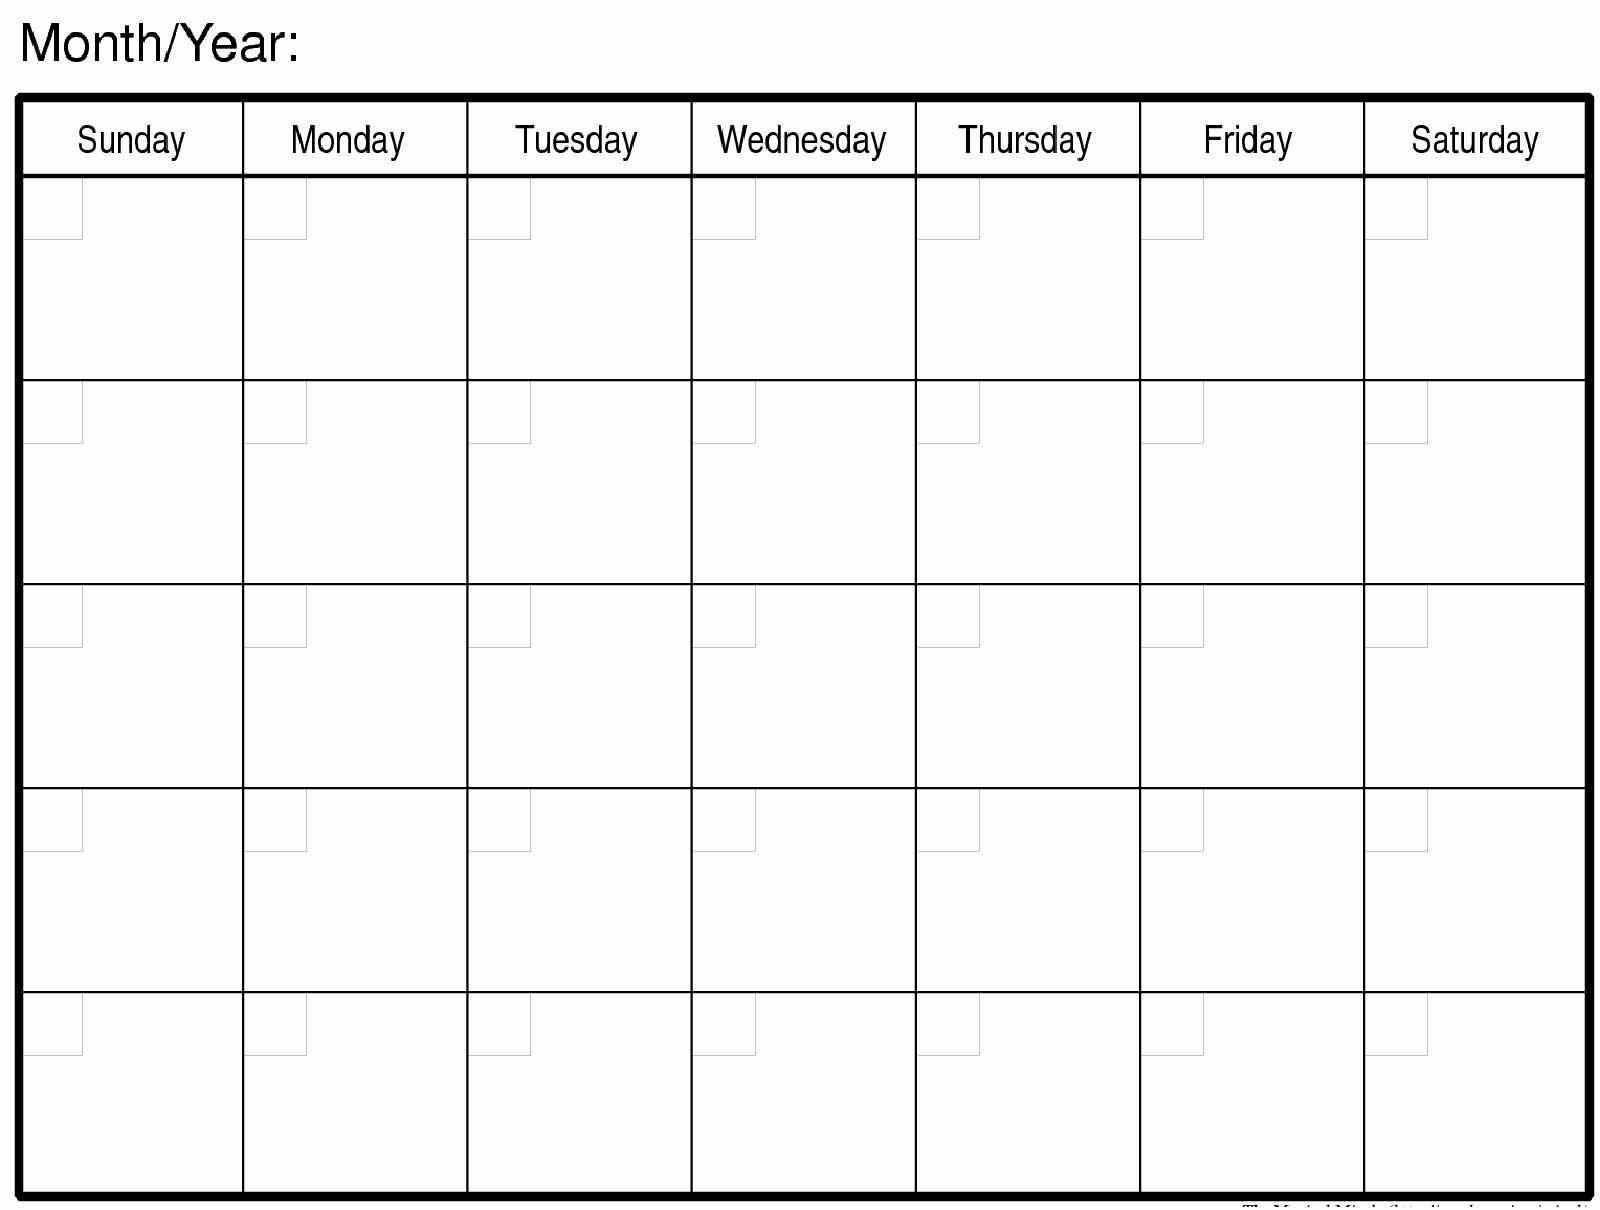 Blank Monthly Calendars To Print Free Calendar 2018 Printable A Monthly Calendar To Print